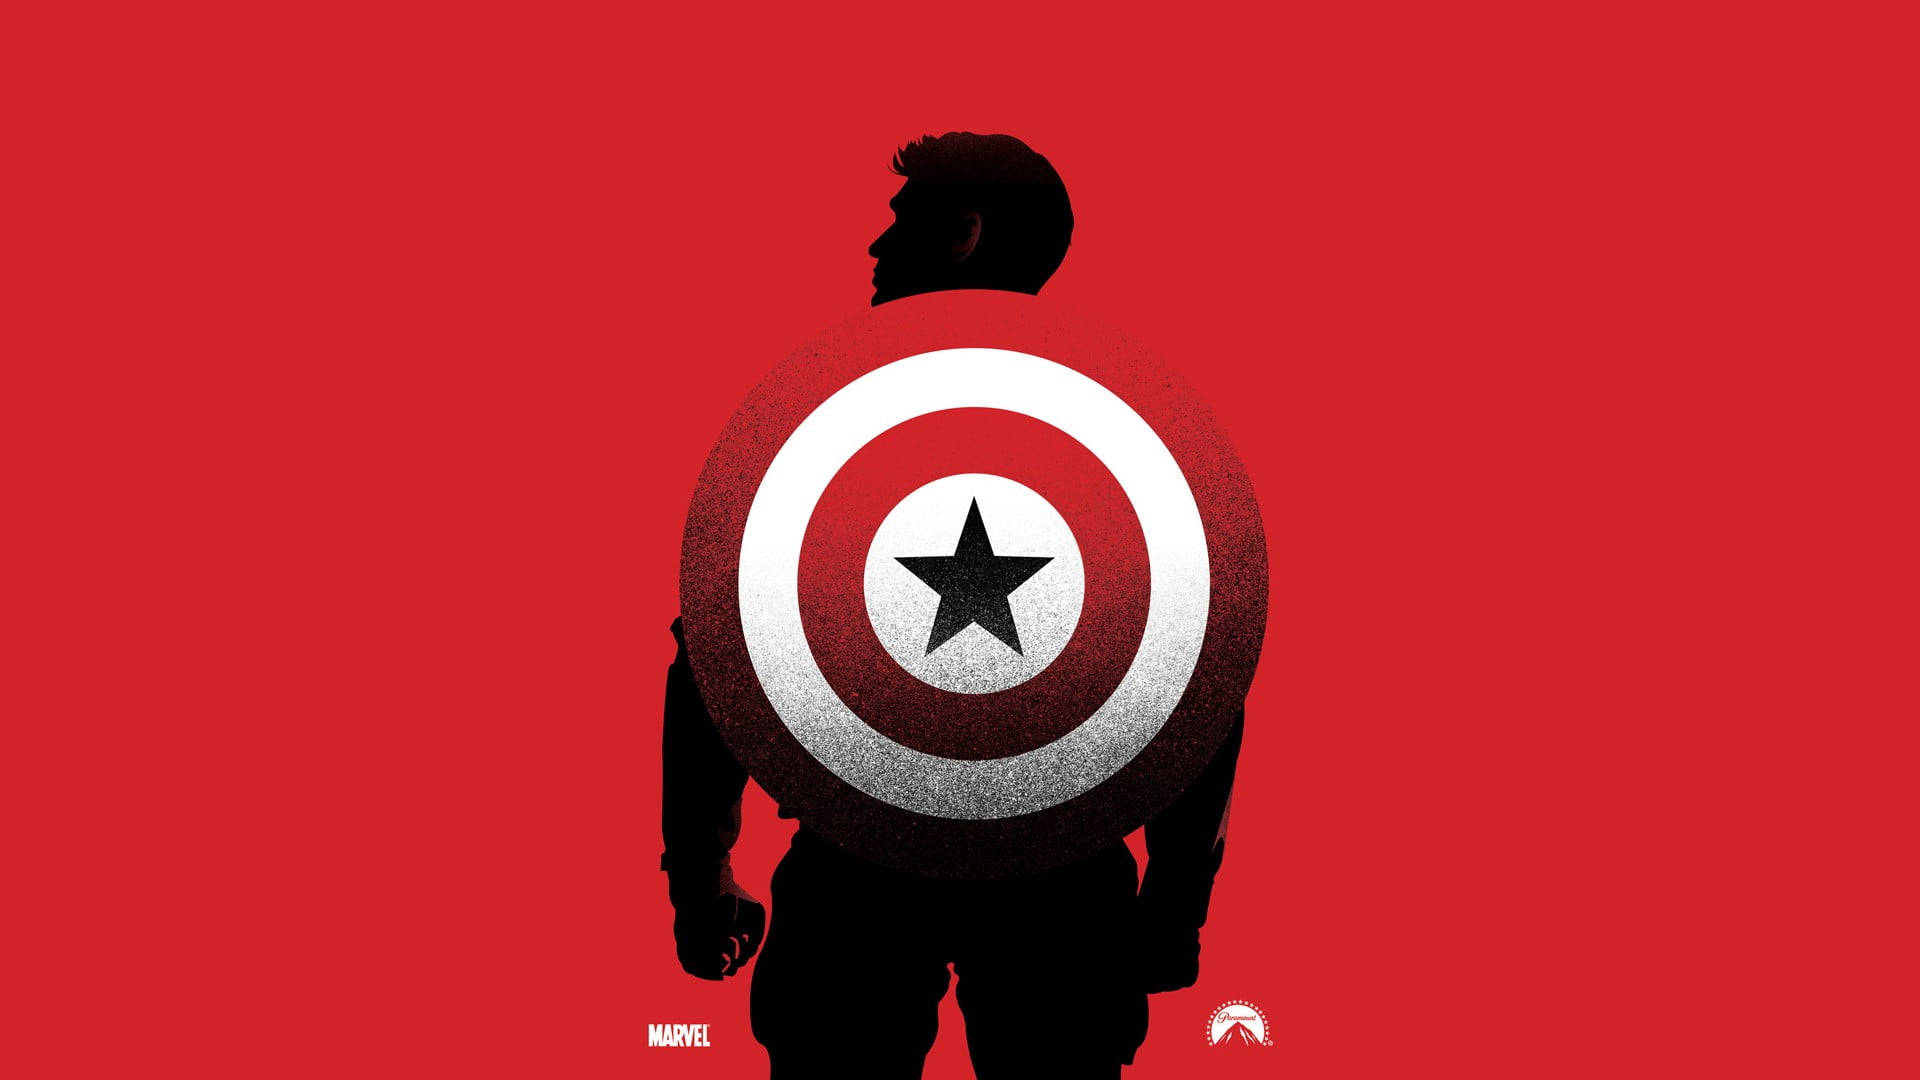 Hd Superhero Captain America Silhouette Wallpaper